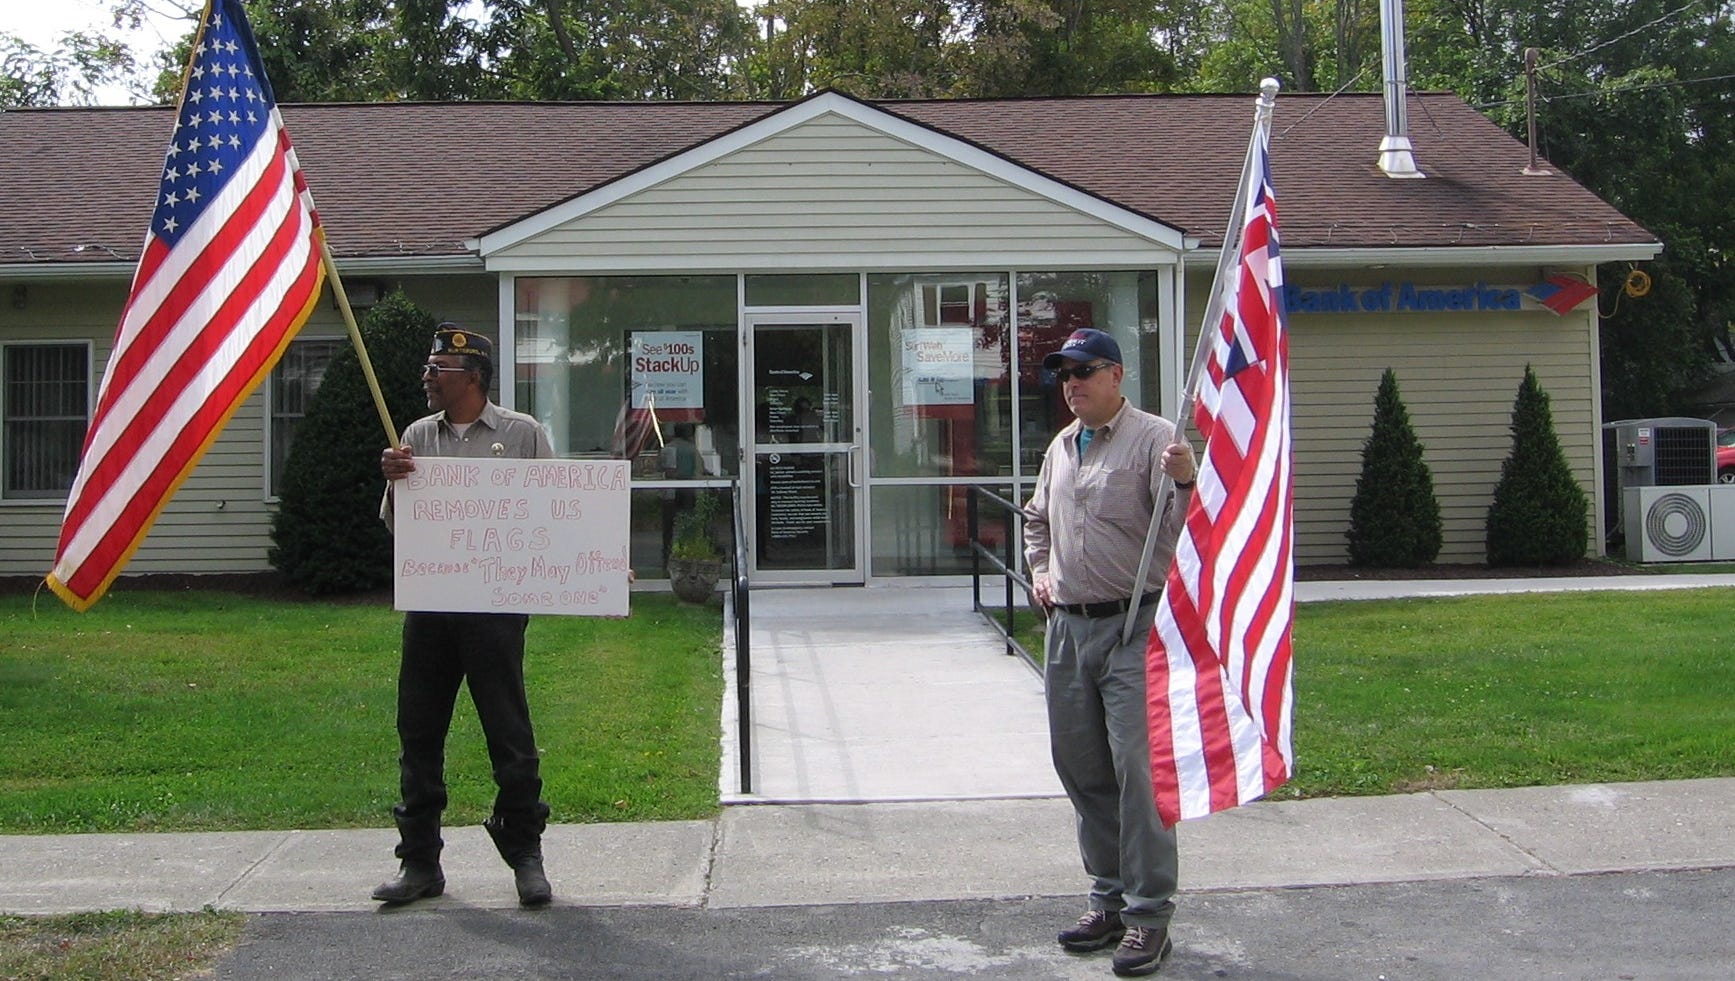 Bank of America flag protest in Wurtsboro